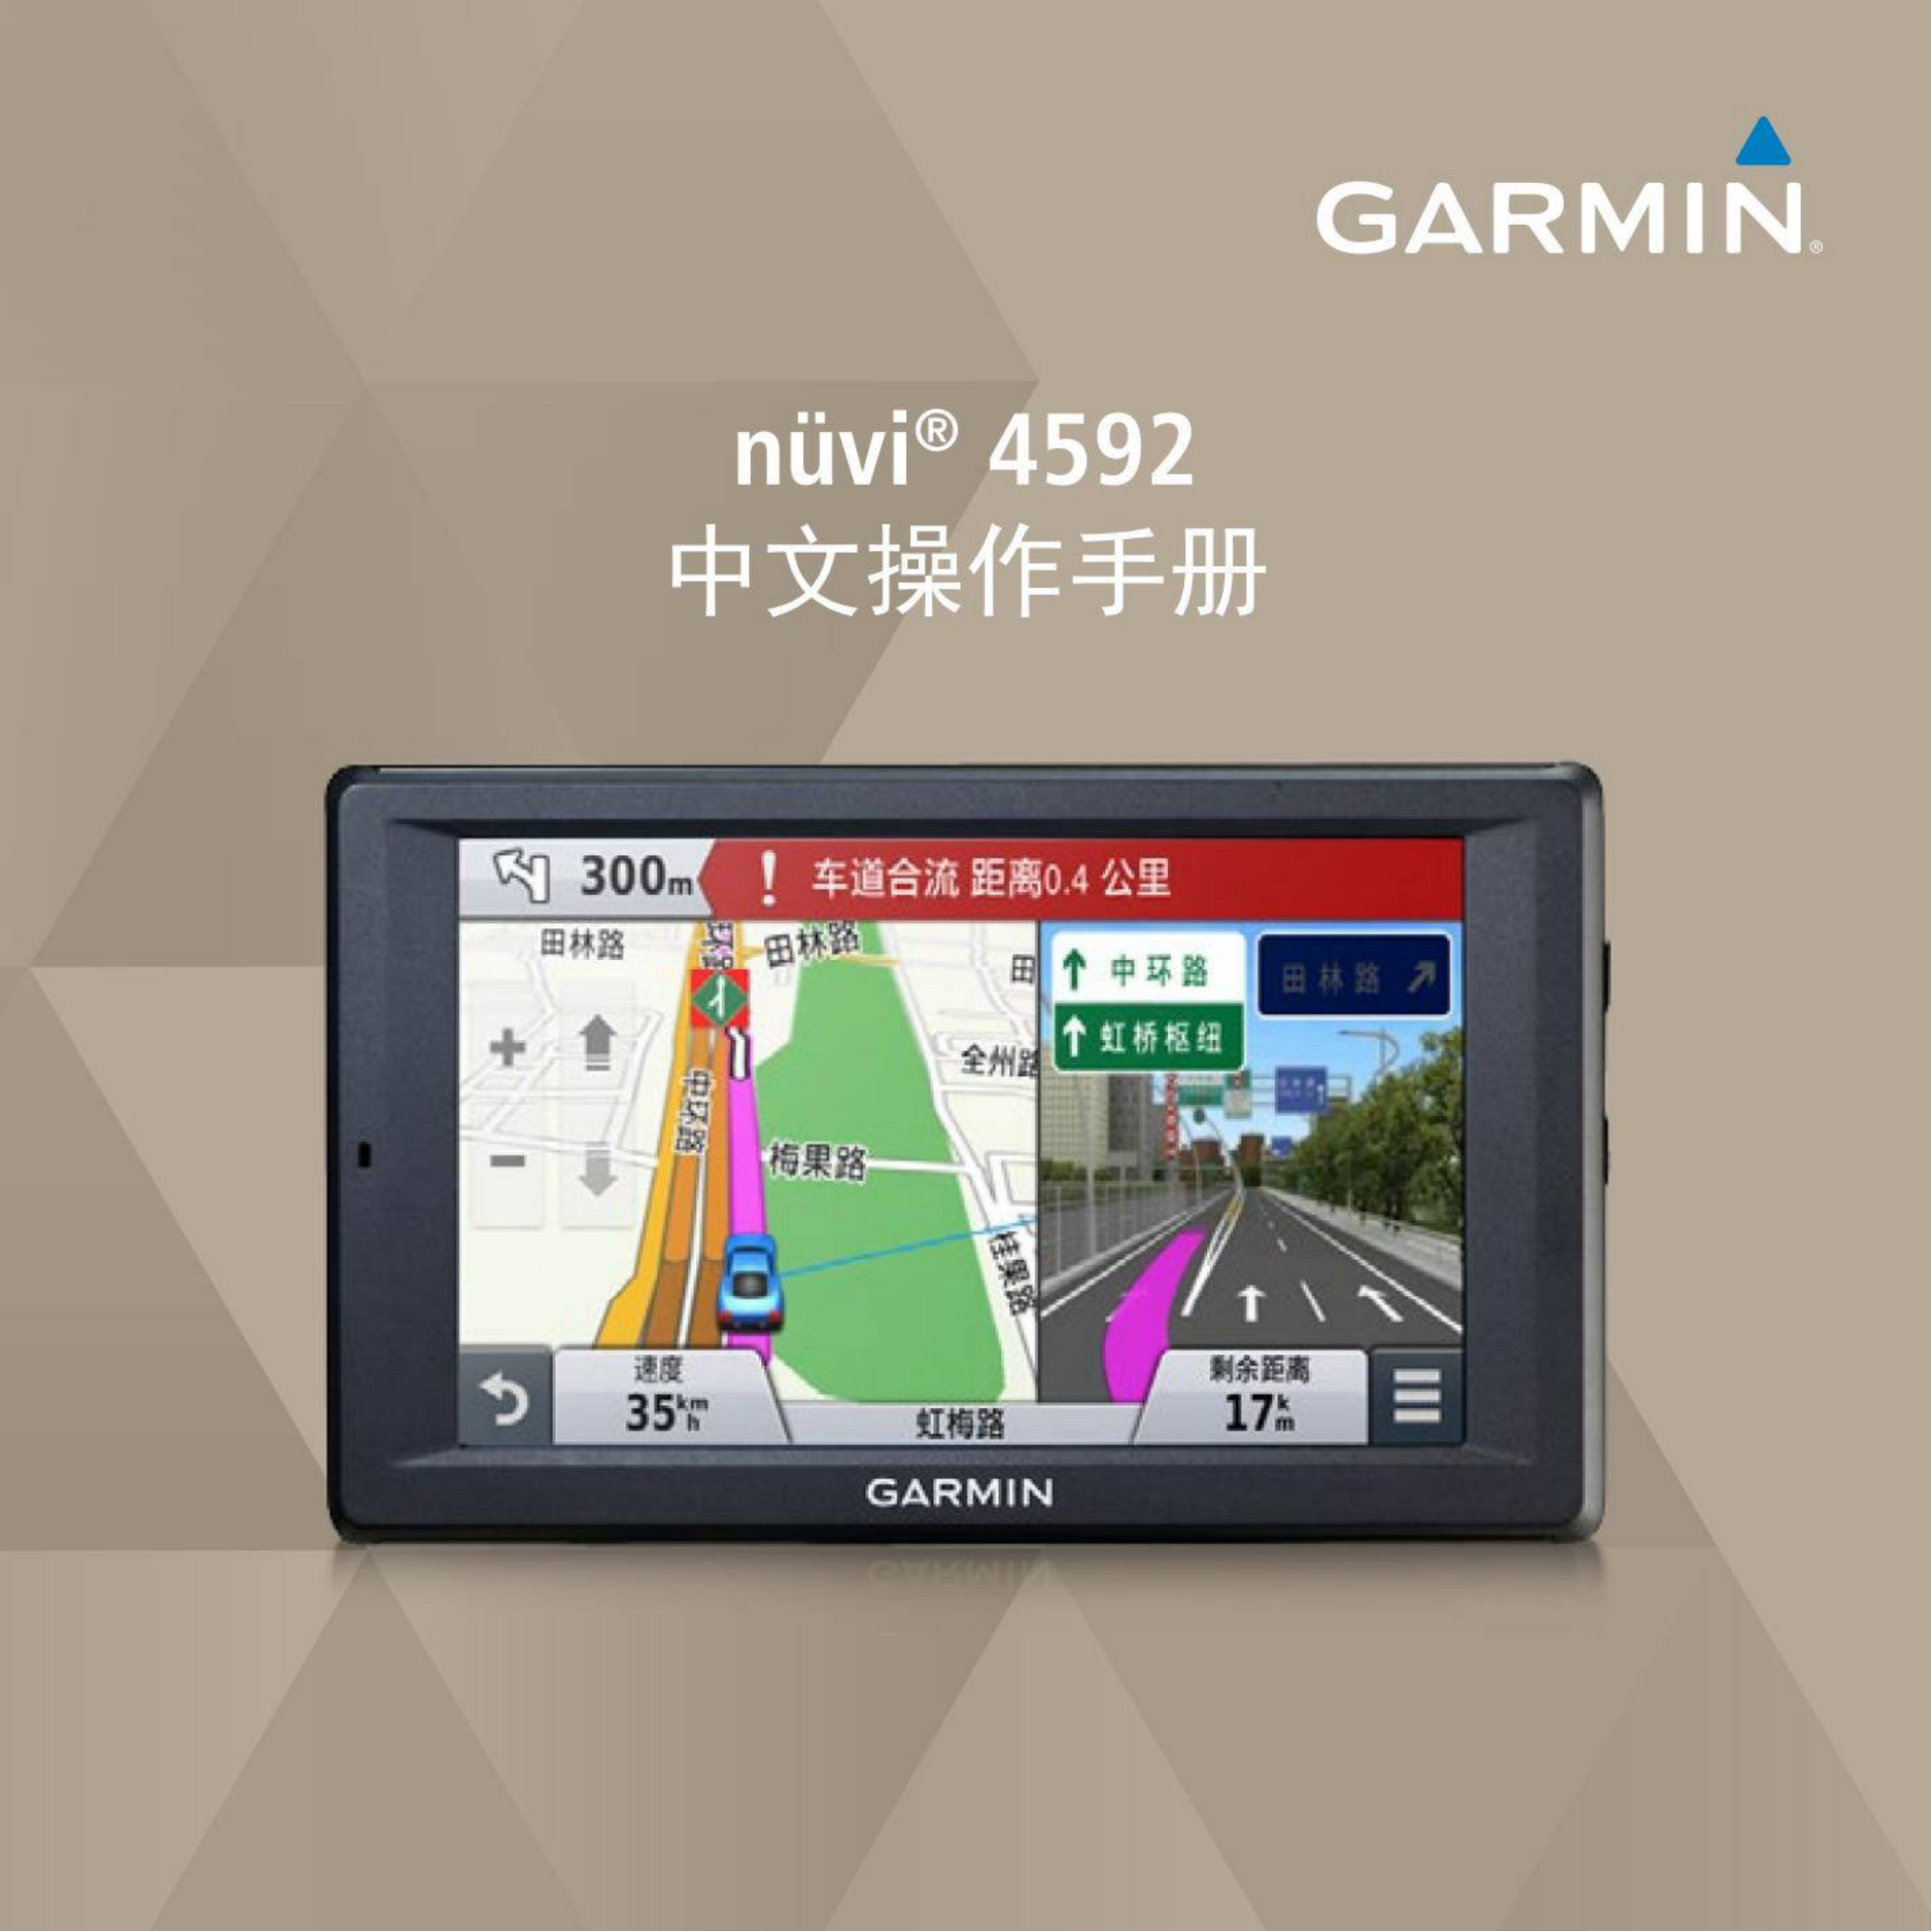 GARMIN GPS导航设备-nuvi 4592说明书.pdf